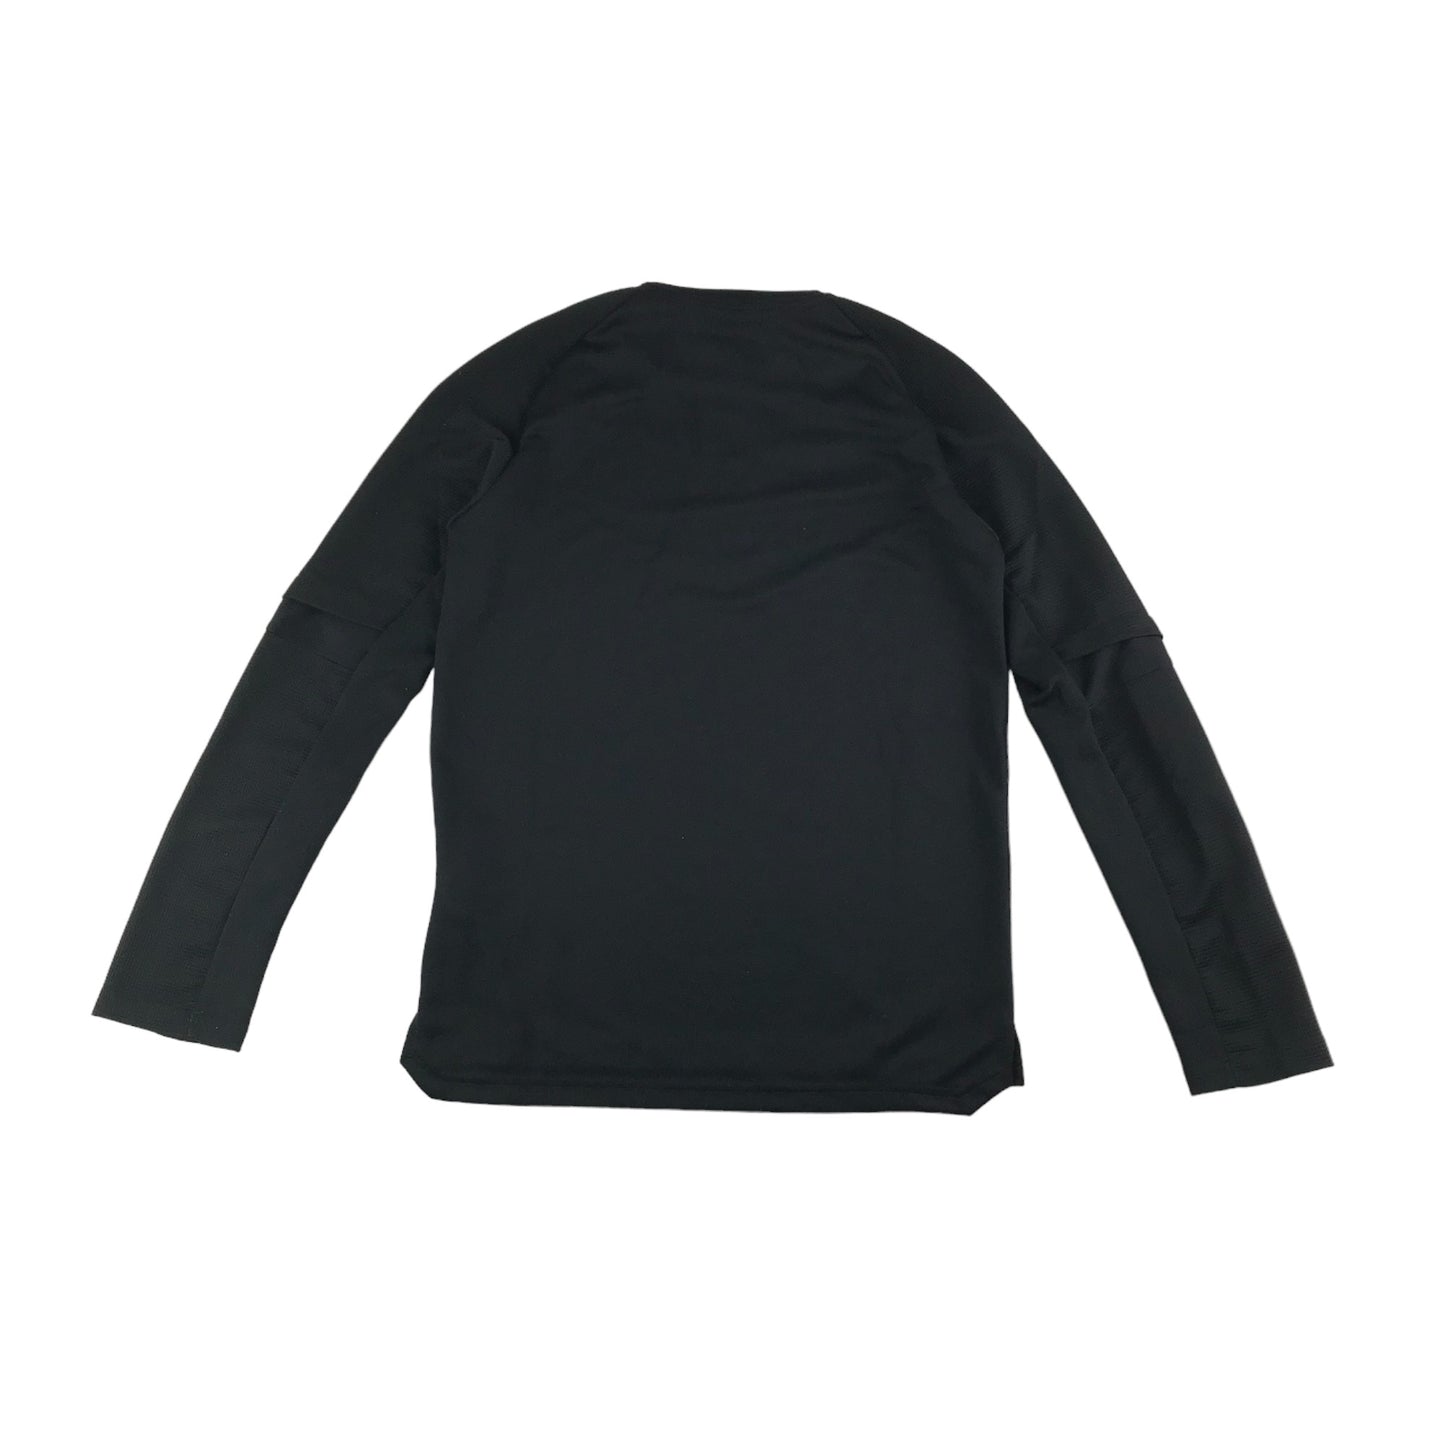 Adidas Sweater Age 11 Black Long Sleeve Sports Top Half Zipper